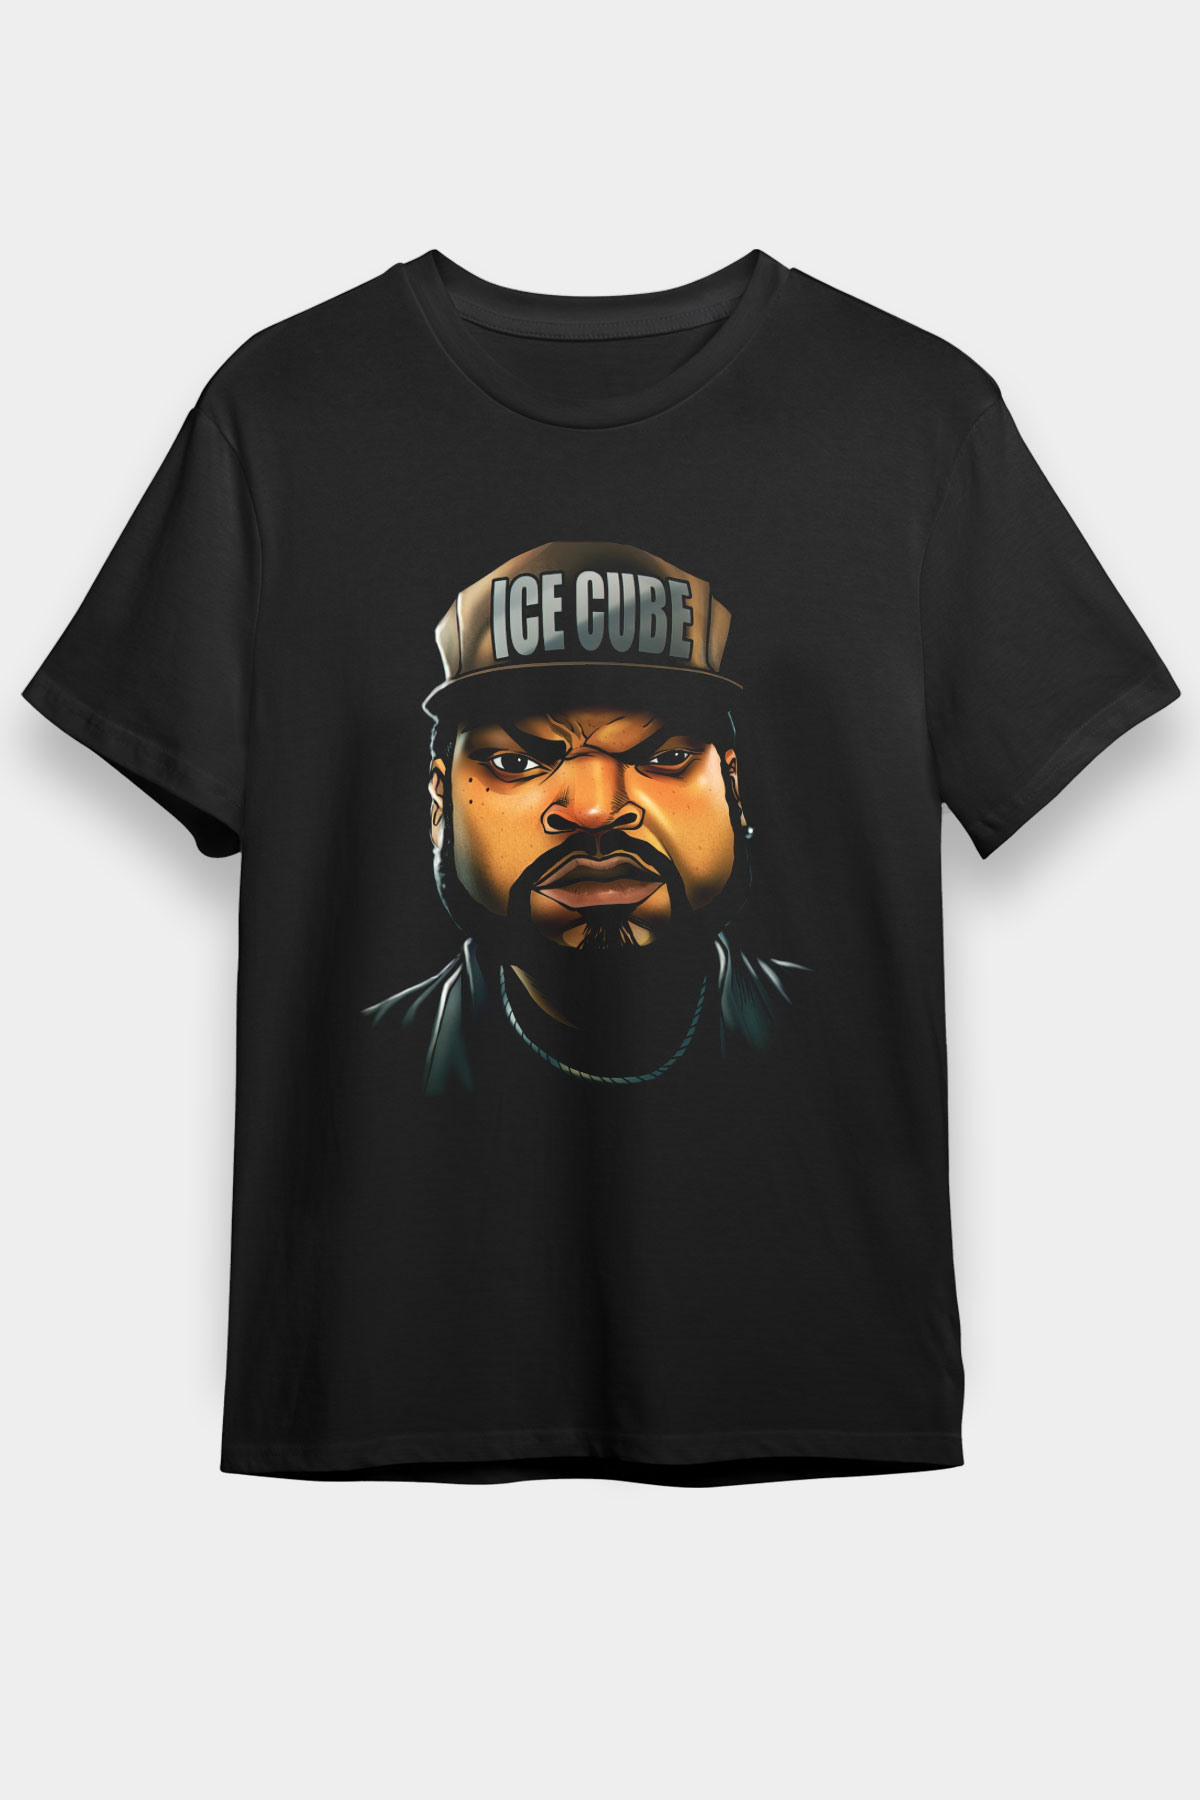 Ice Cube T shirt,Hip Hop,Rap Tshirt 11/